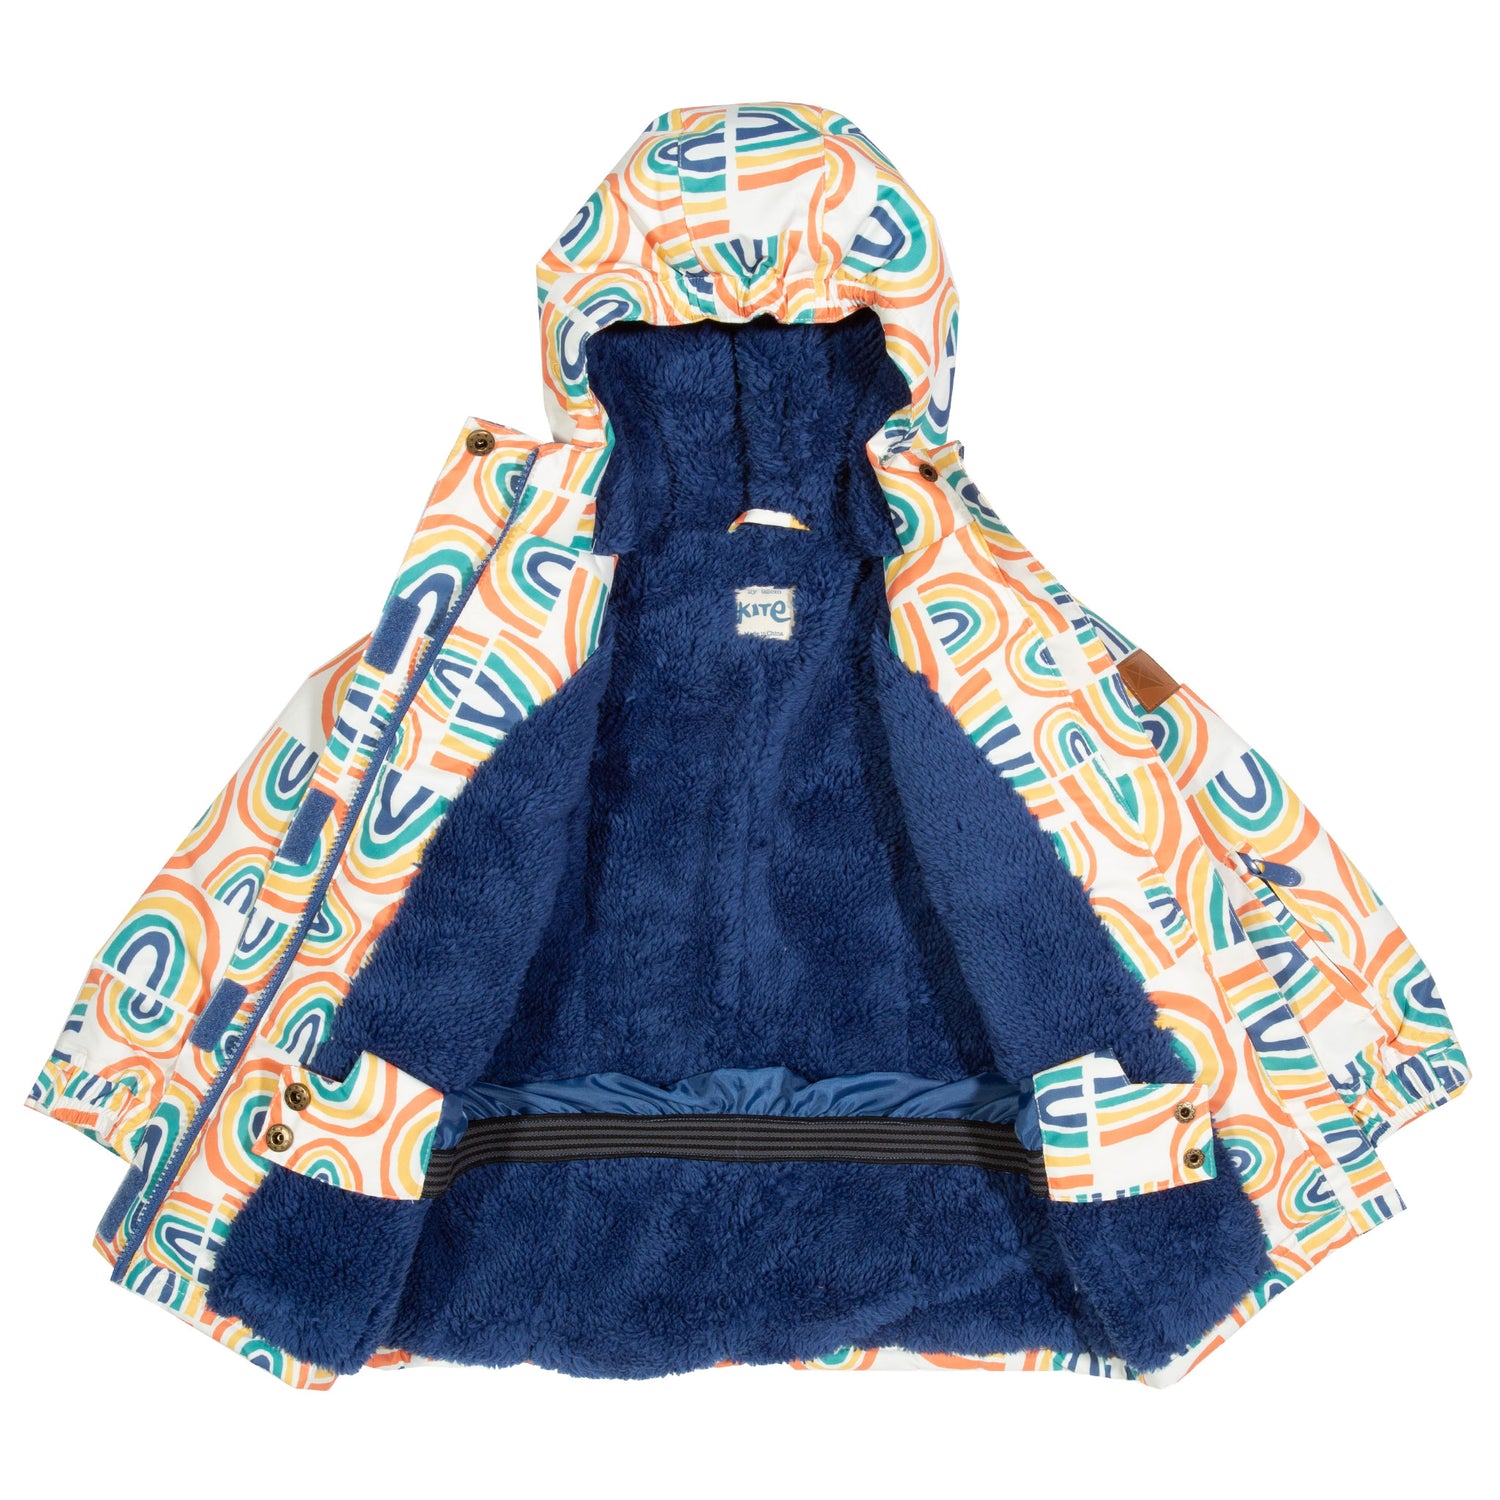 Rainbow nimbus baby coat with snow skirt